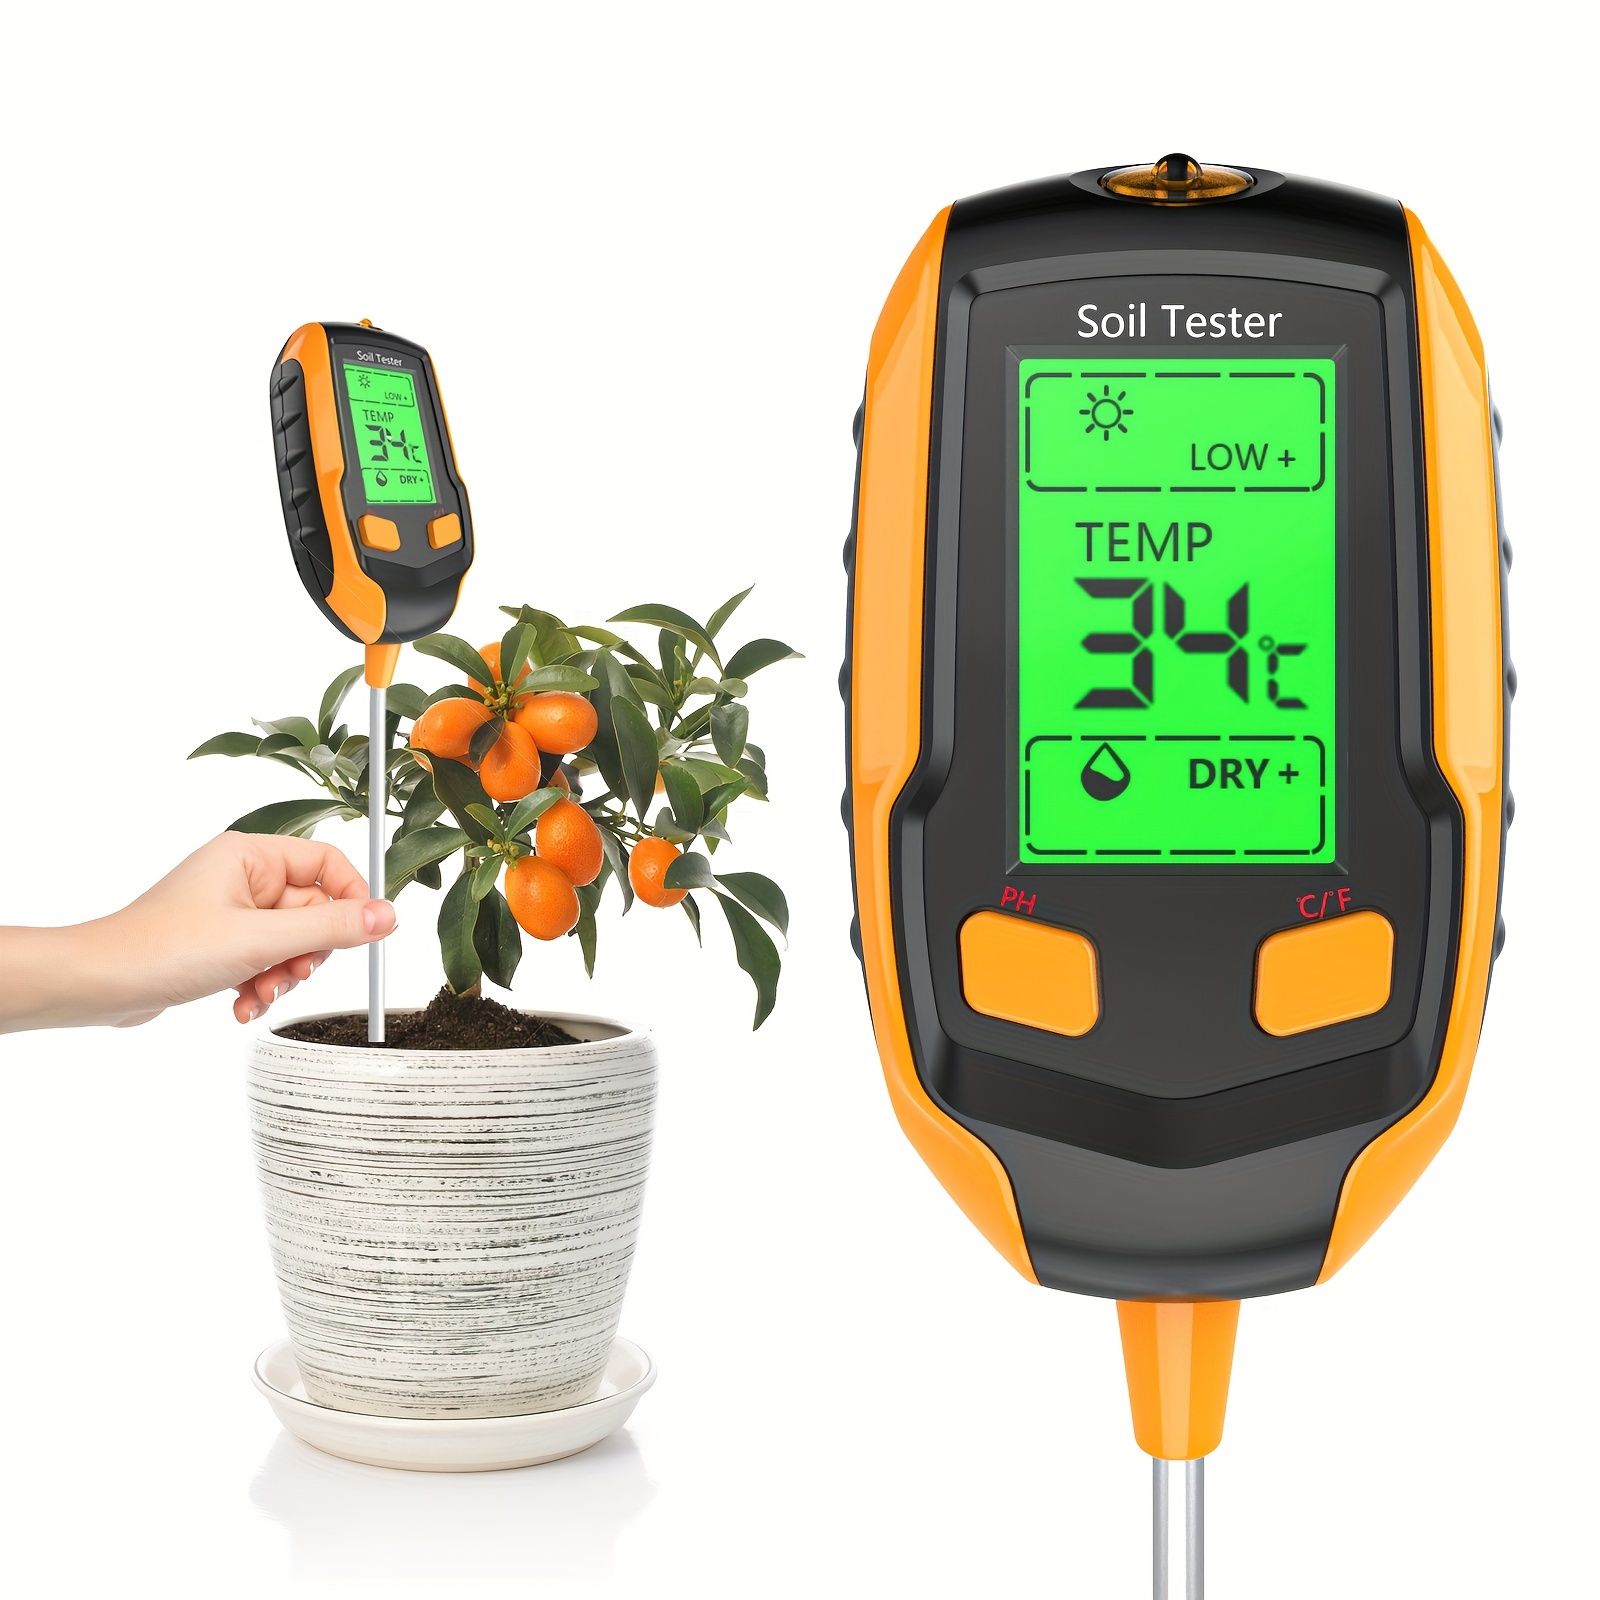 

4-in-1 Soil Moisture Meter Digital Ph Meter/soil Moisture/plant Temperature/sunlight Intensity, Backlight Lcd Display, Soil Test Meter For Garden, Lawn, Plant Care, Farm And Indoor Outdoor Plants